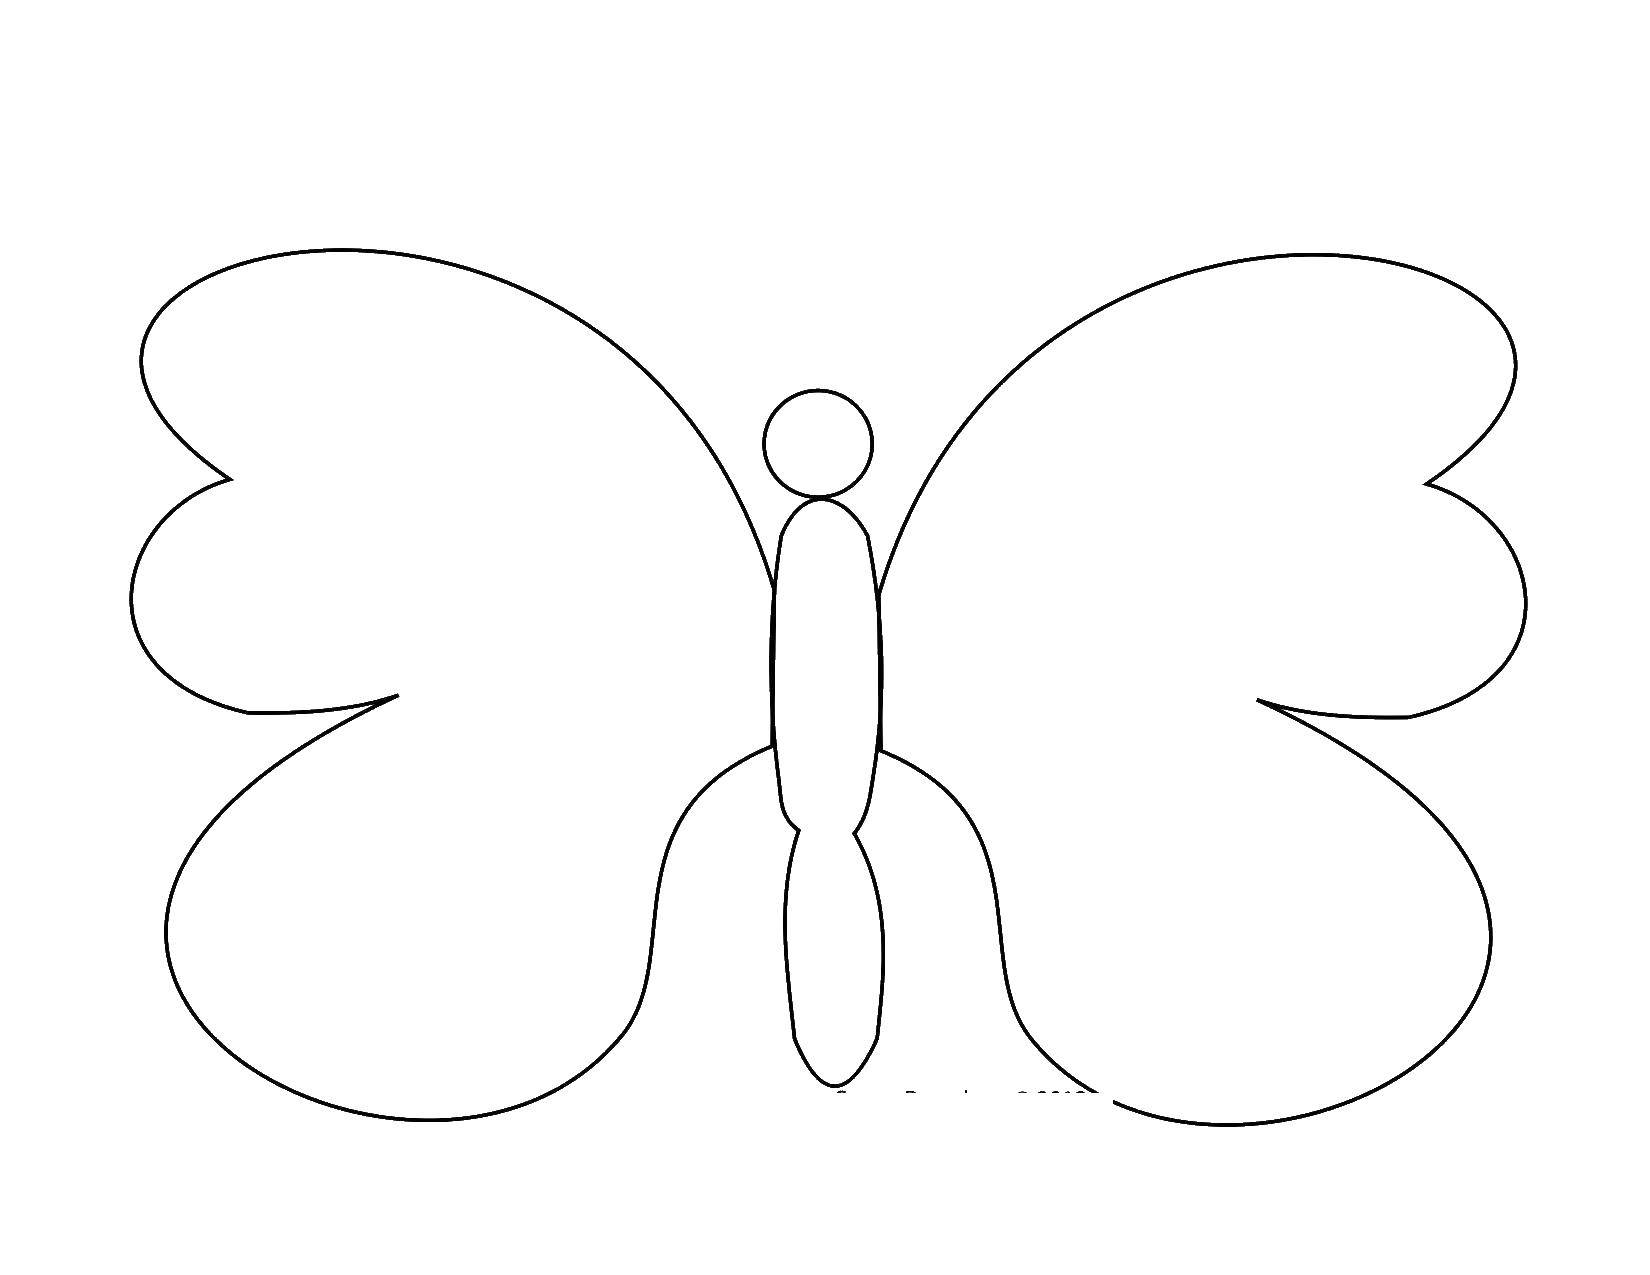 Розмальовки  Метелик крильцями неузорчатыми. Завантажити розмальовку комахи, метелики, крила.  Роздрукувати ,метелики,